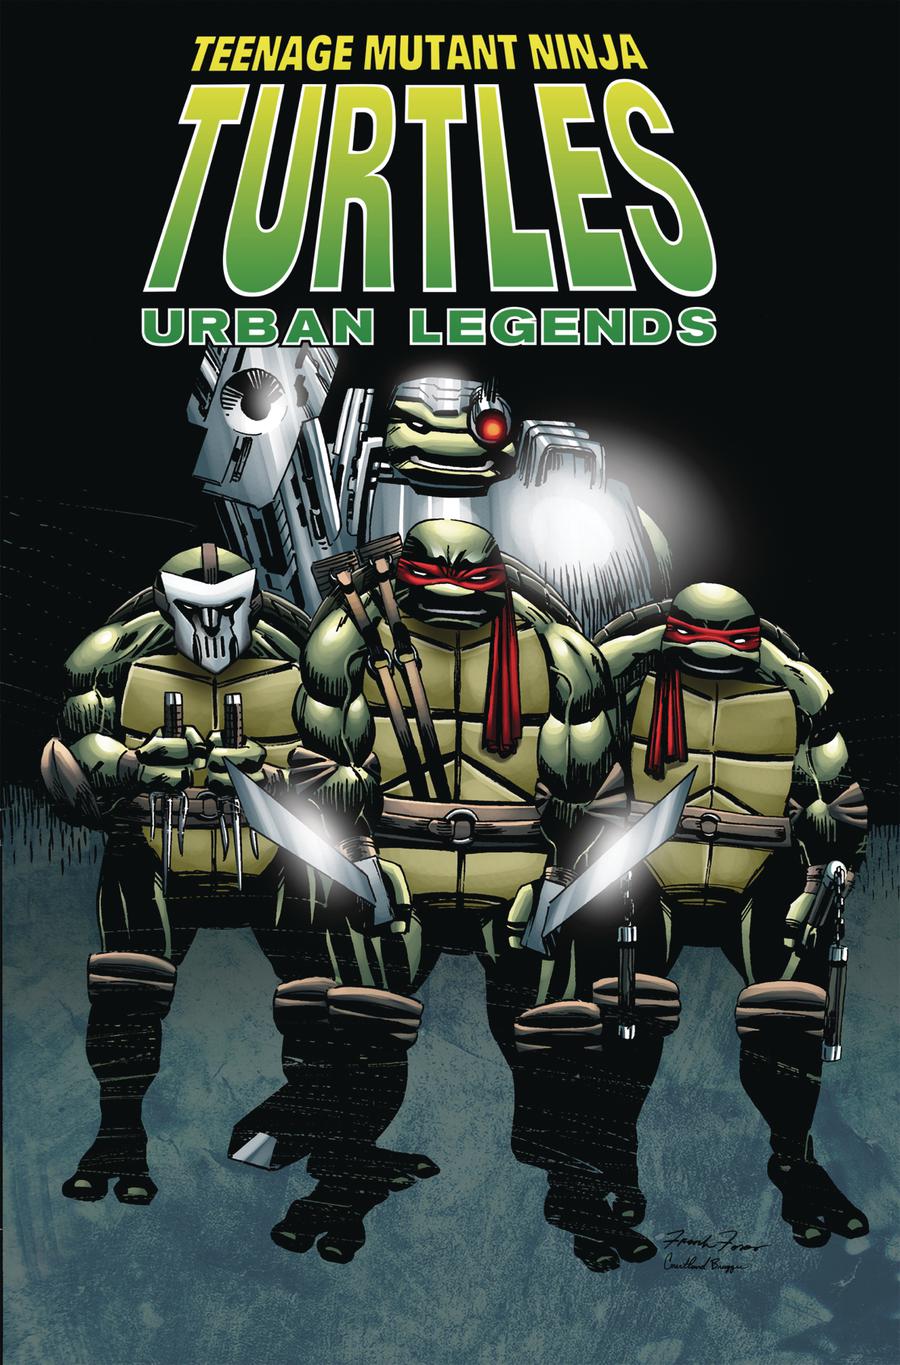 Teenage Mutant Ninja Turtles Urban Legends Vol 1 TP